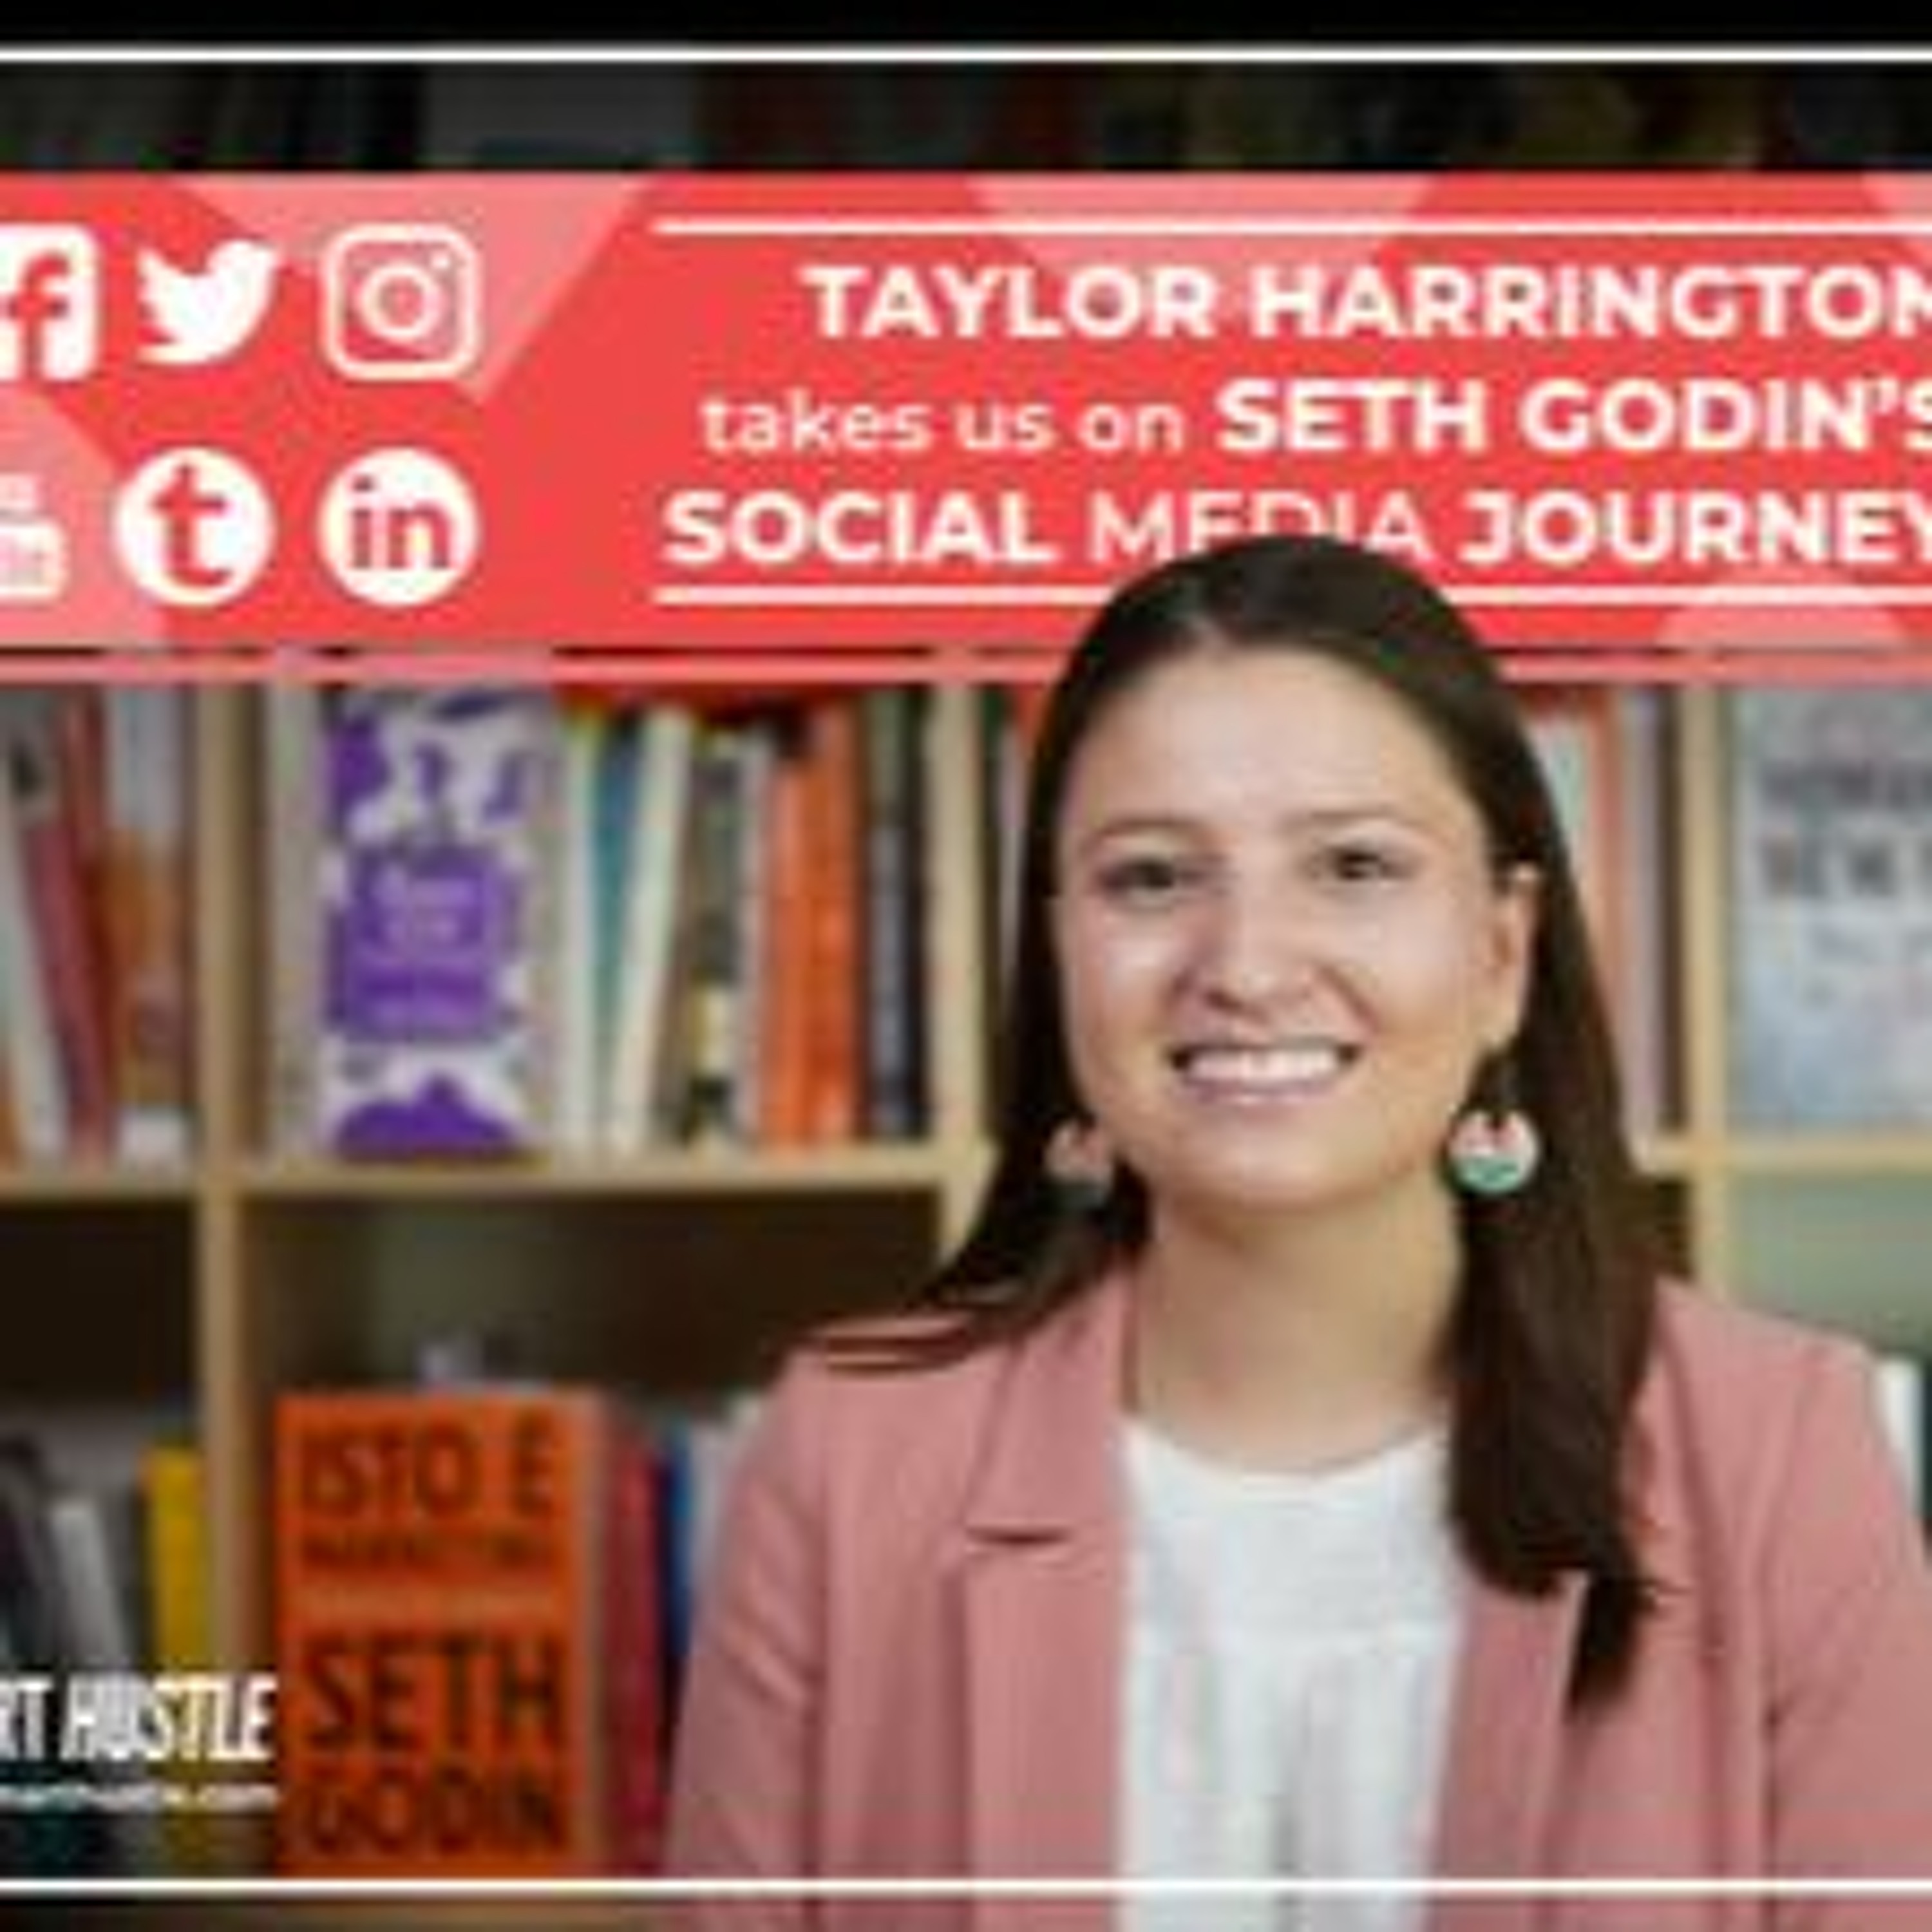 Taylor Harrington Takes Us on Seth Godin’s Social Media Journey